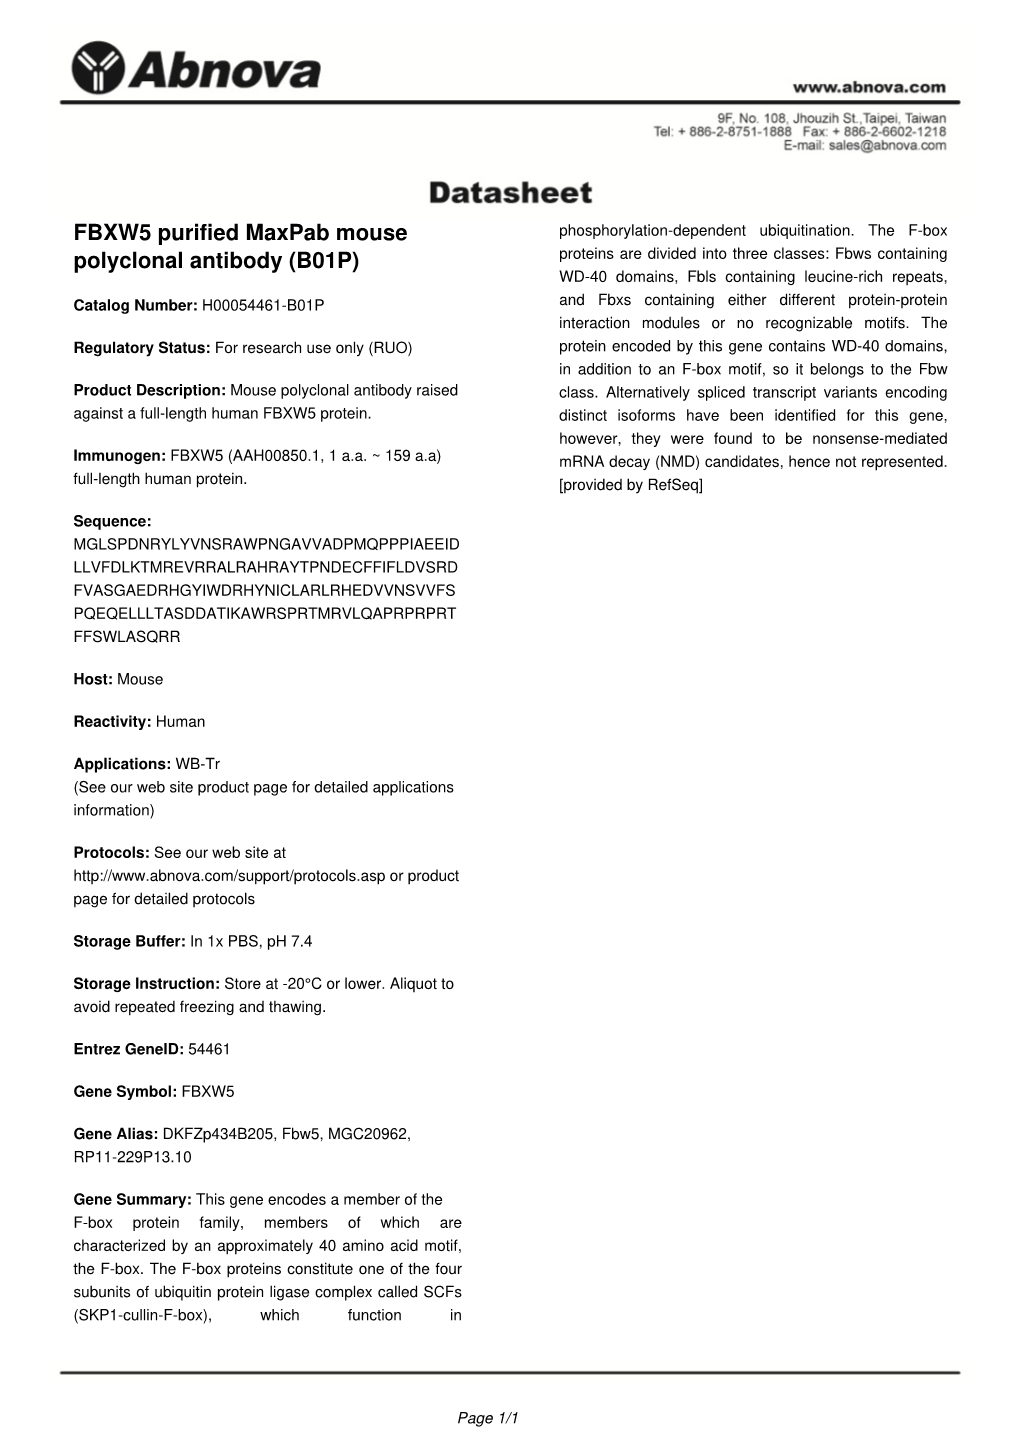 FBXW5 Purified Maxpab Mouse Polyclonal Antibody (B01P)